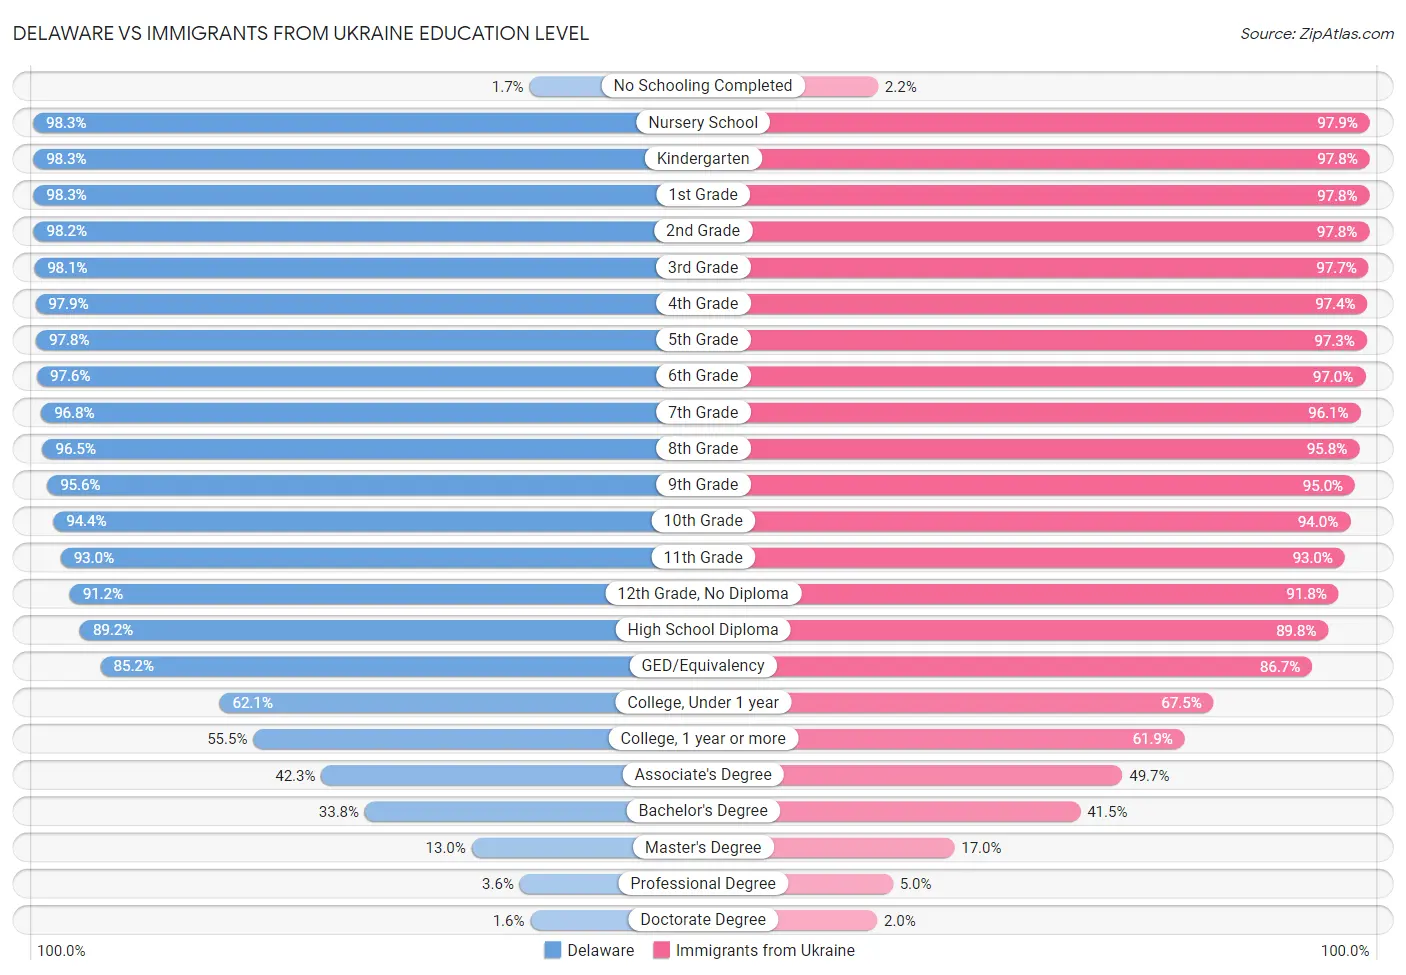 Delaware vs Immigrants from Ukraine Education Level